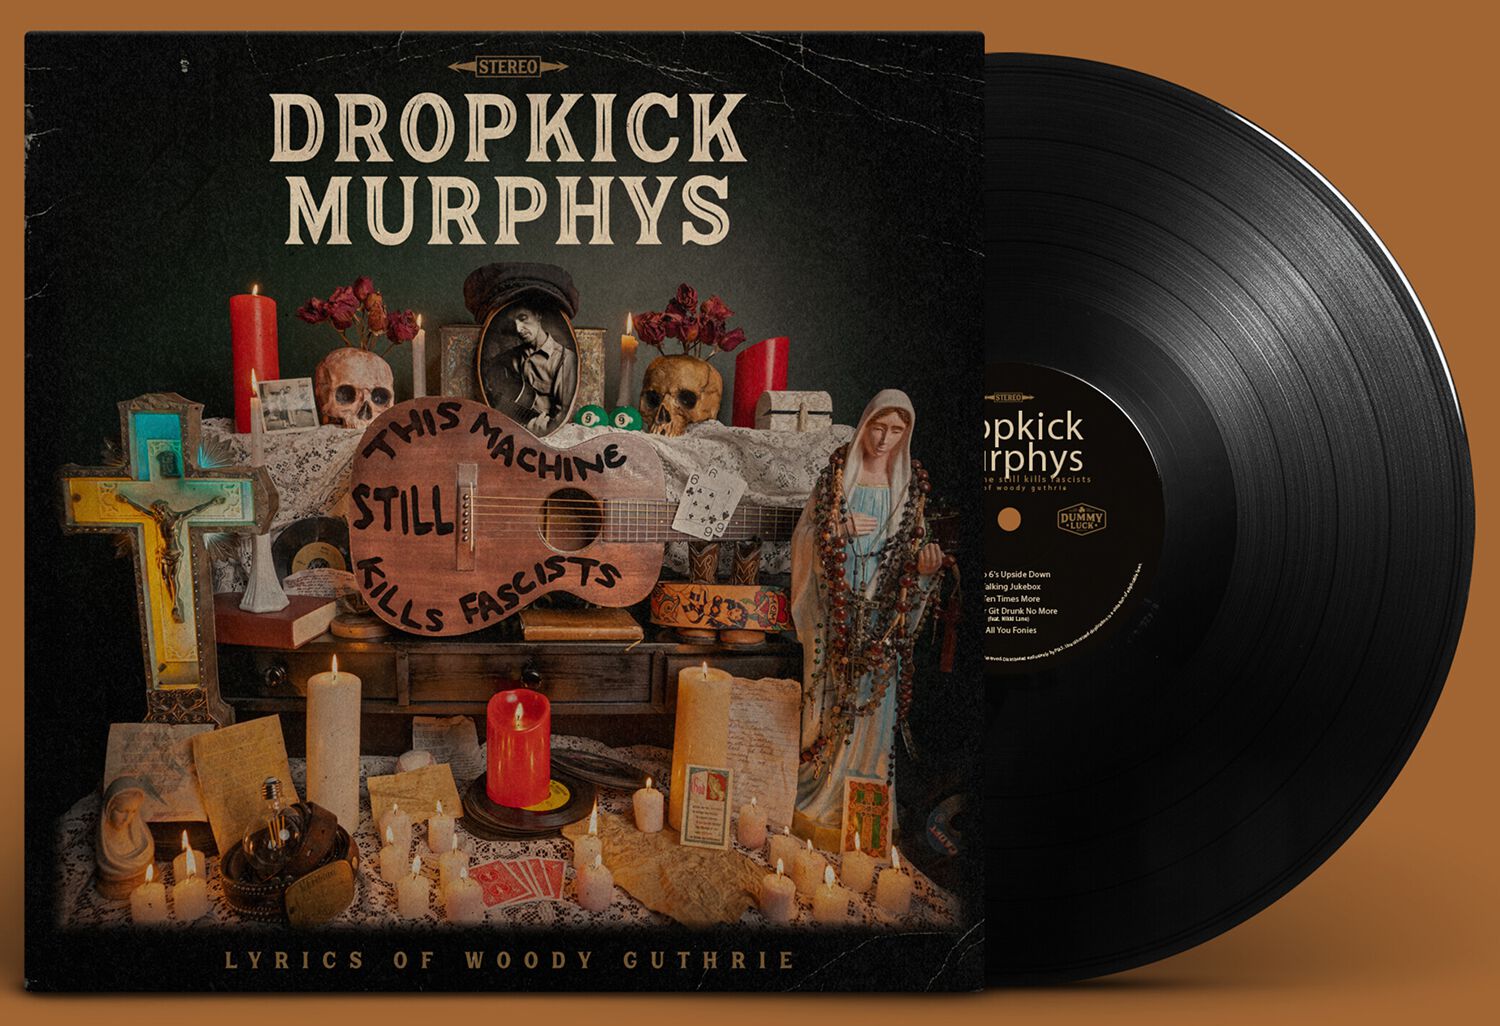 Levně Dropkick Murphys feat. Woody Guthrie - This machine still kills fascists LP standard